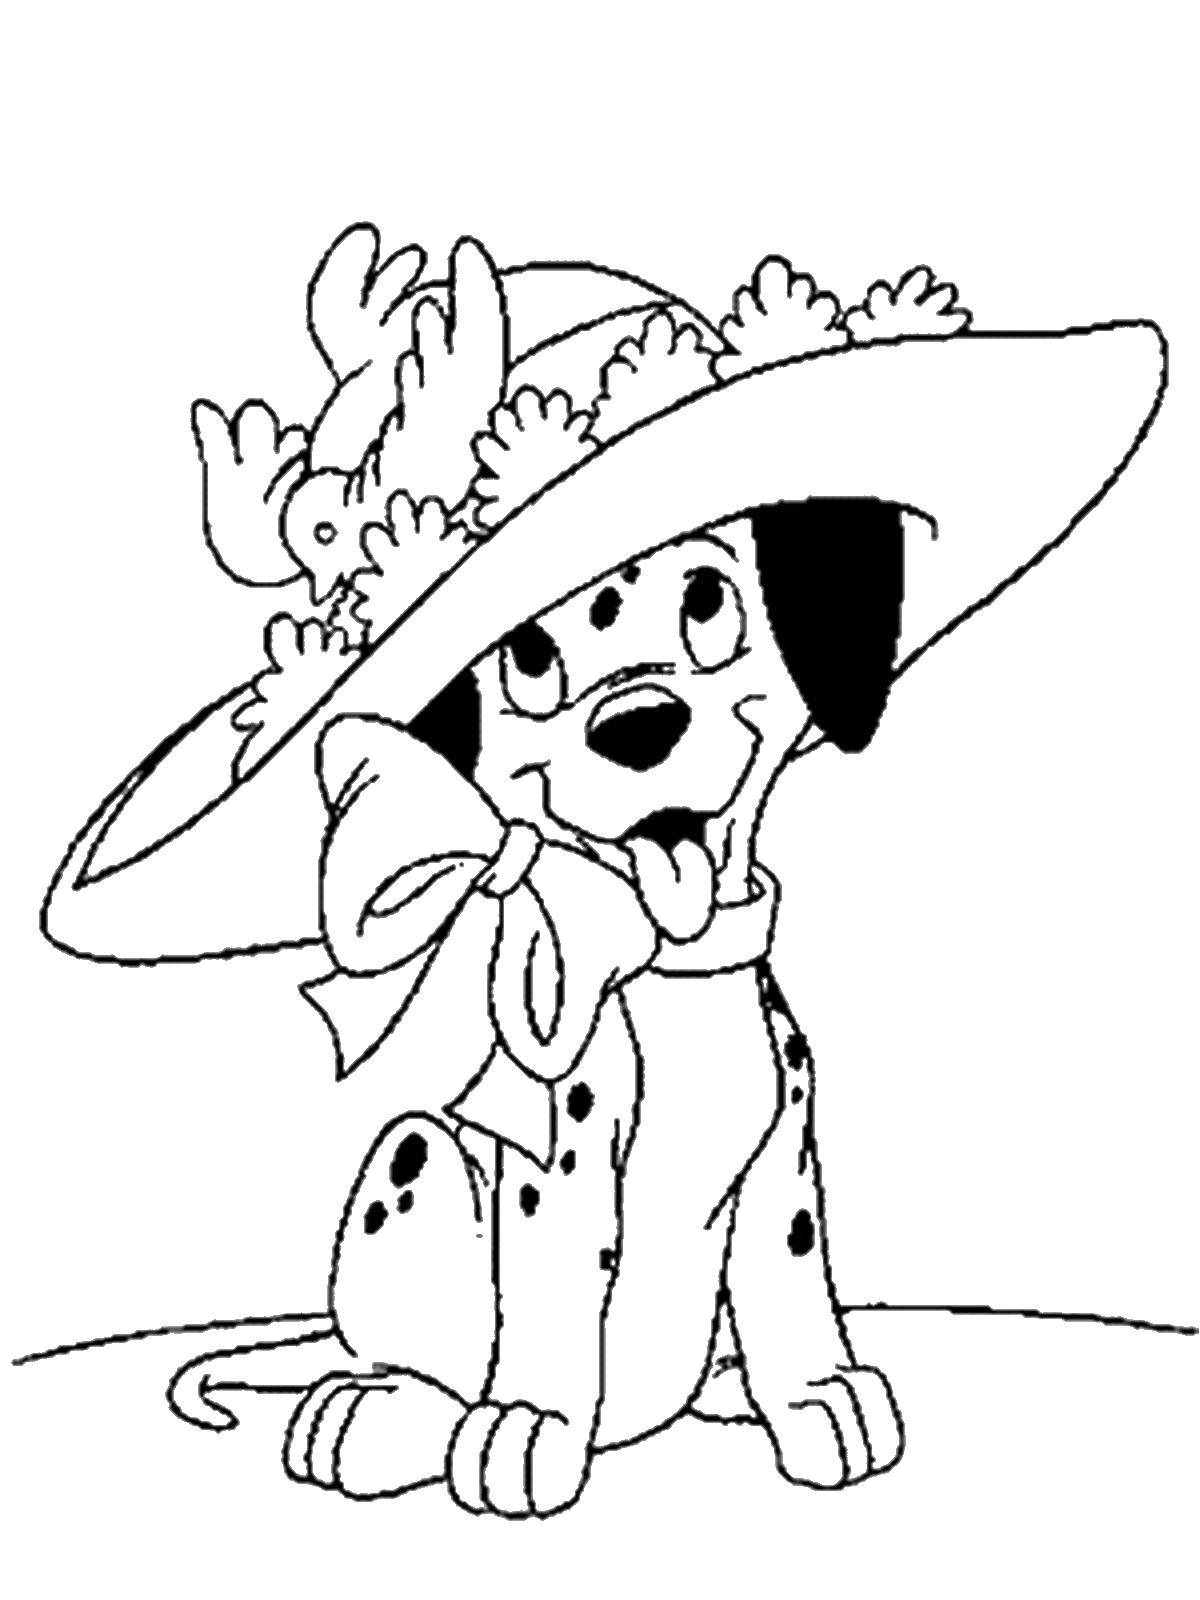 Coloring Dalmatians in the hat. Category 101 Dalmatians. Tags:  101 Dalmatians, Disney, cartoon.